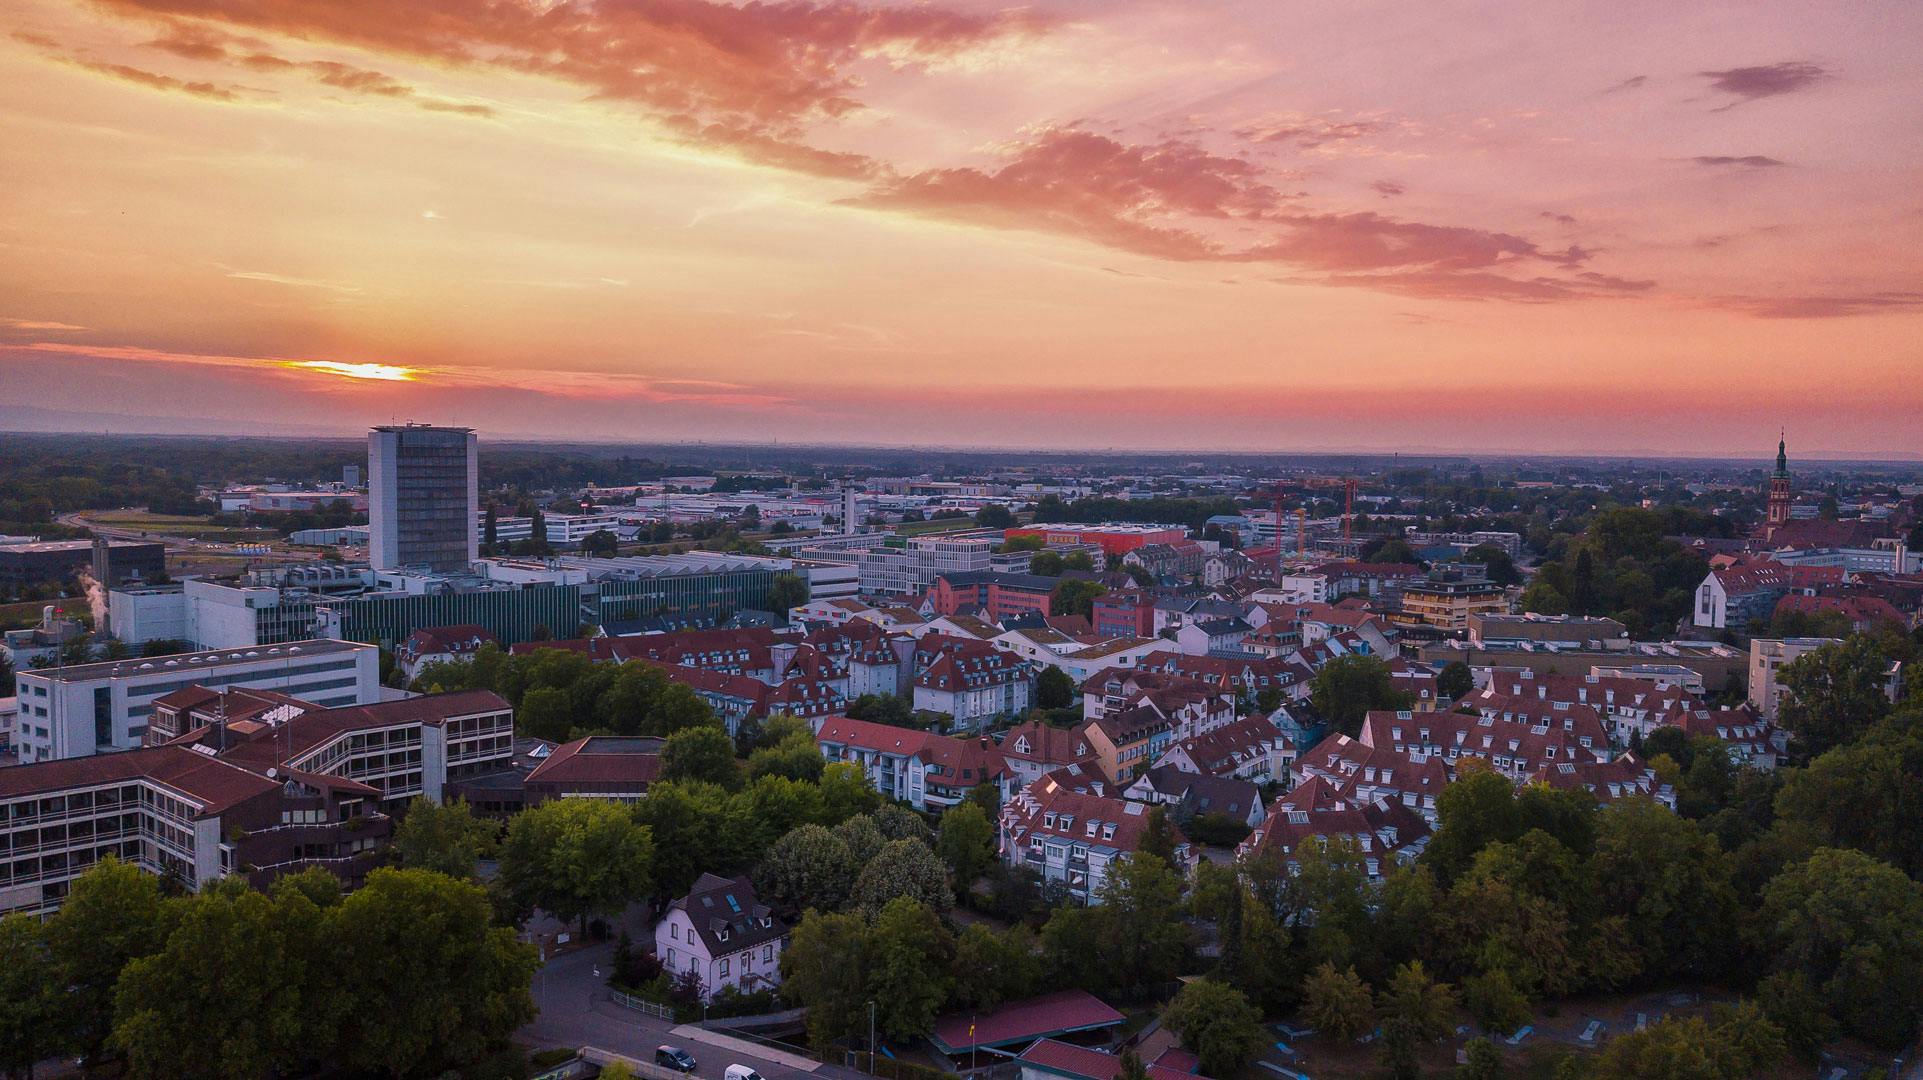 Cityscape of Offenburg, Germany at sunrise